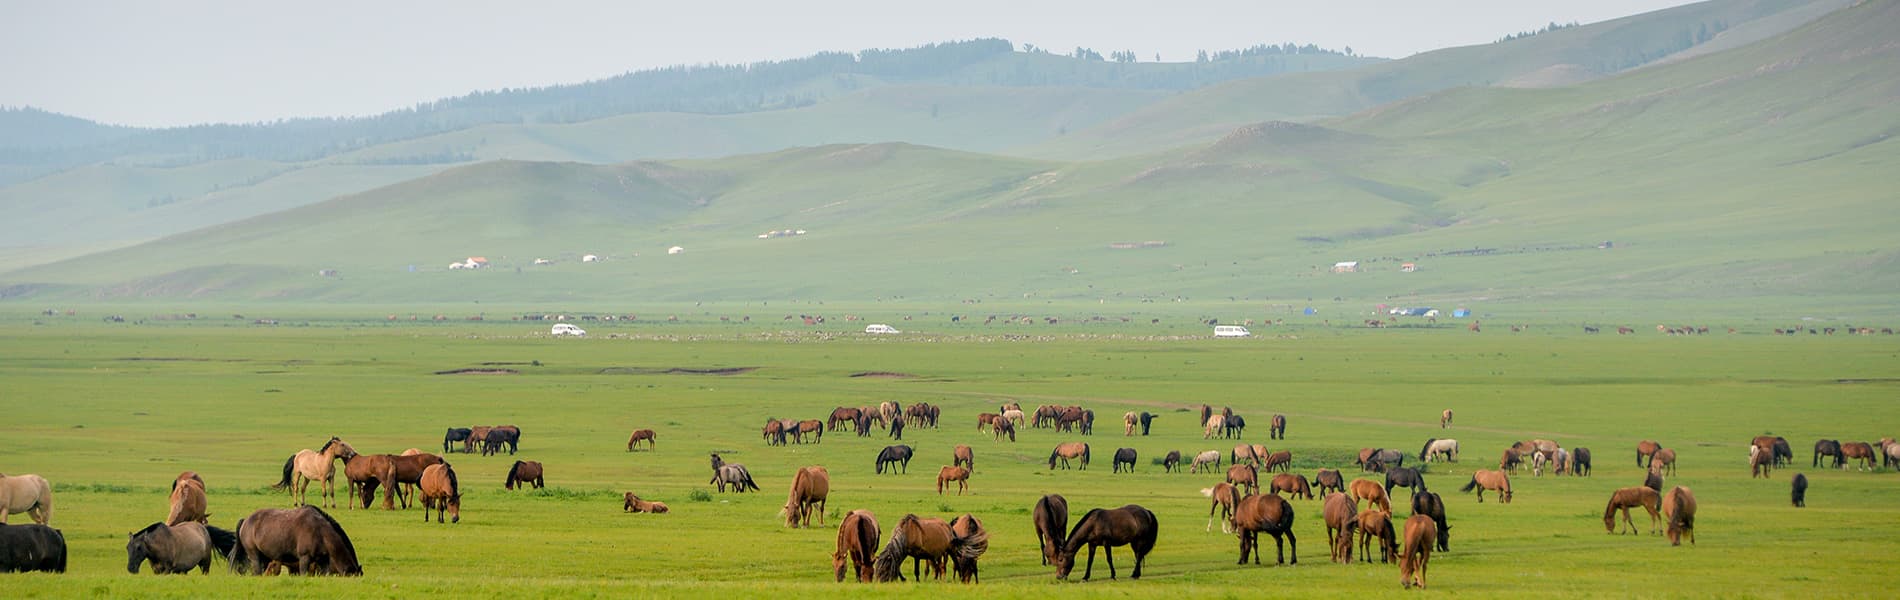 Western Mongolia Adventures & Golden Eagle Festival